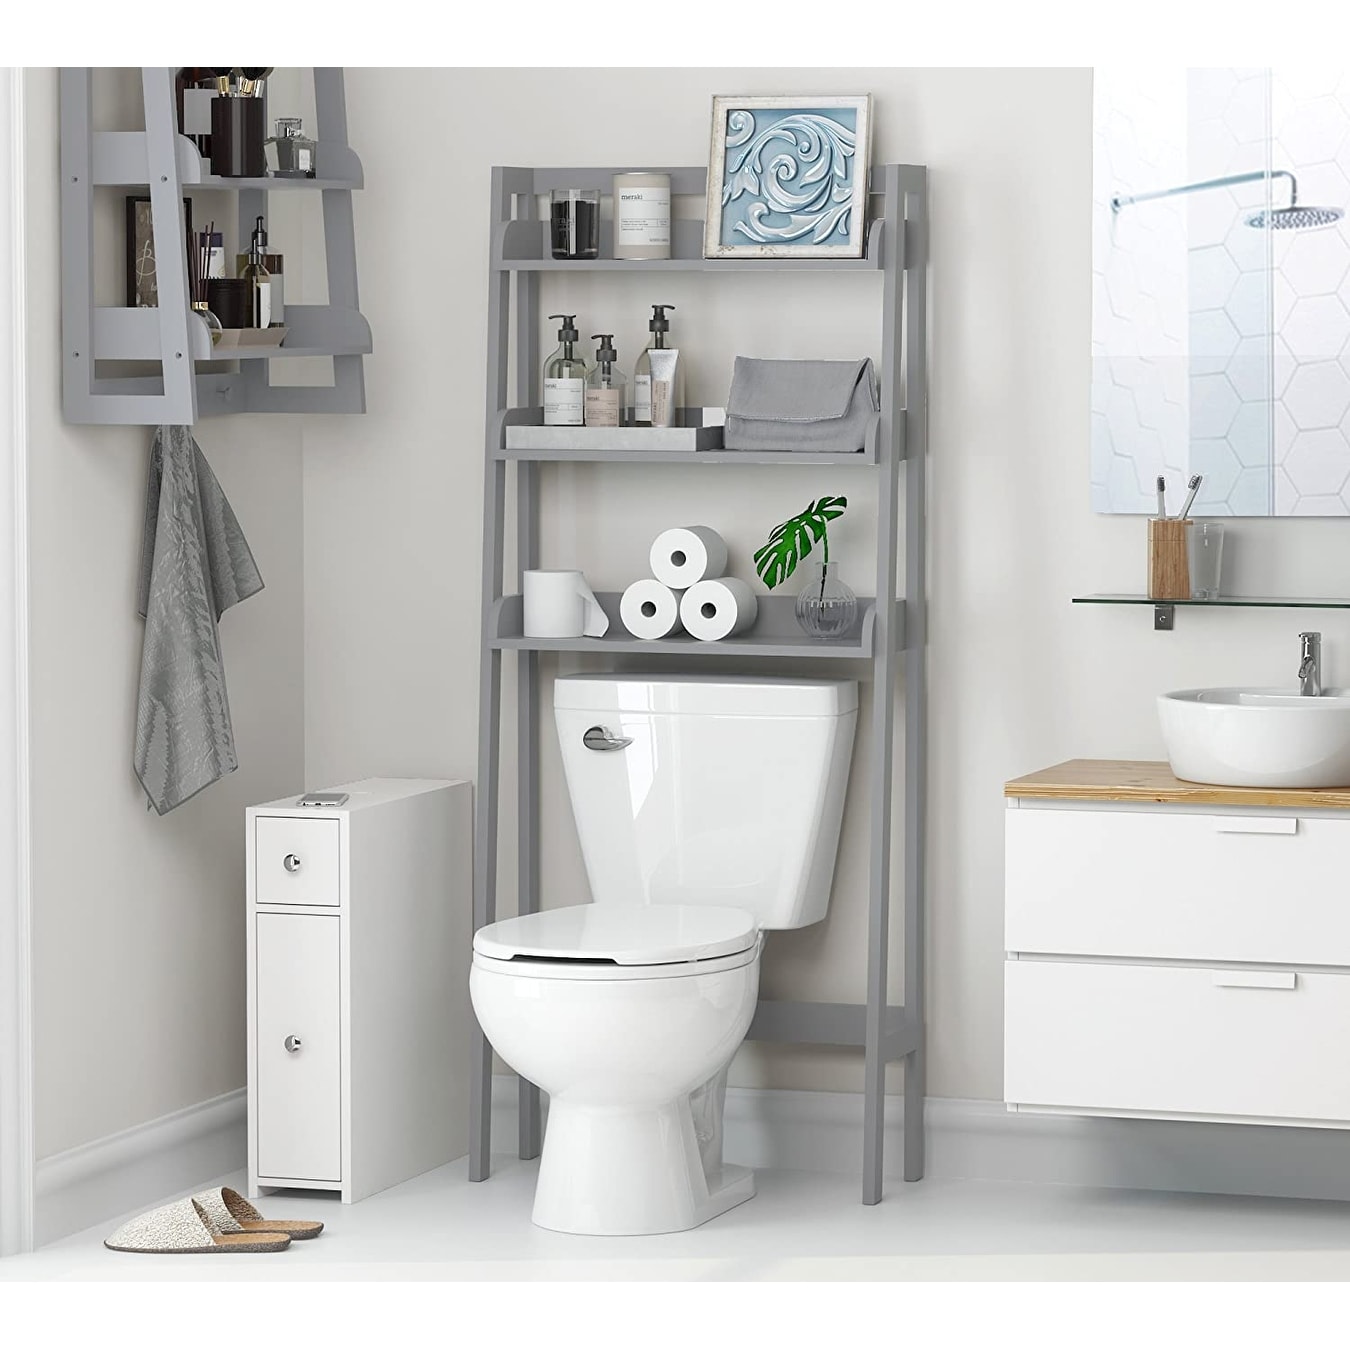 https://ak1.ostkcdn.com/images/products/is/images/direct/b2036dda72bffabc21cb18a668bb64dd699939db/Spirich-Bathroom-Shelf-Storage-Cabinet-Over-the-Toilet%2CCollection-Spacesaver.jpg